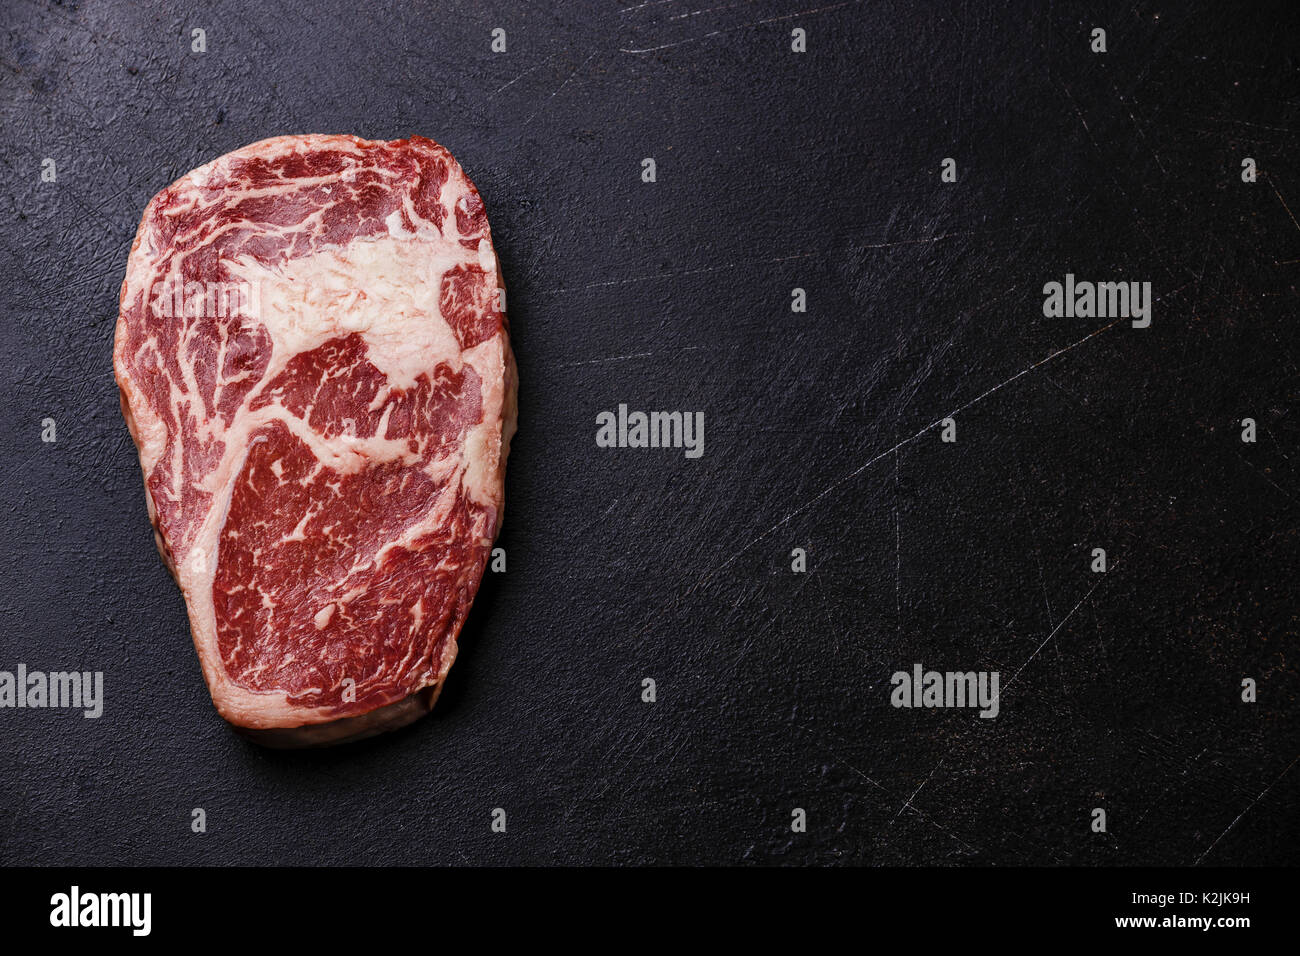 Raw fresh marbled meat Steak Rib eye Black Angus on dark background copy space Stock Photo